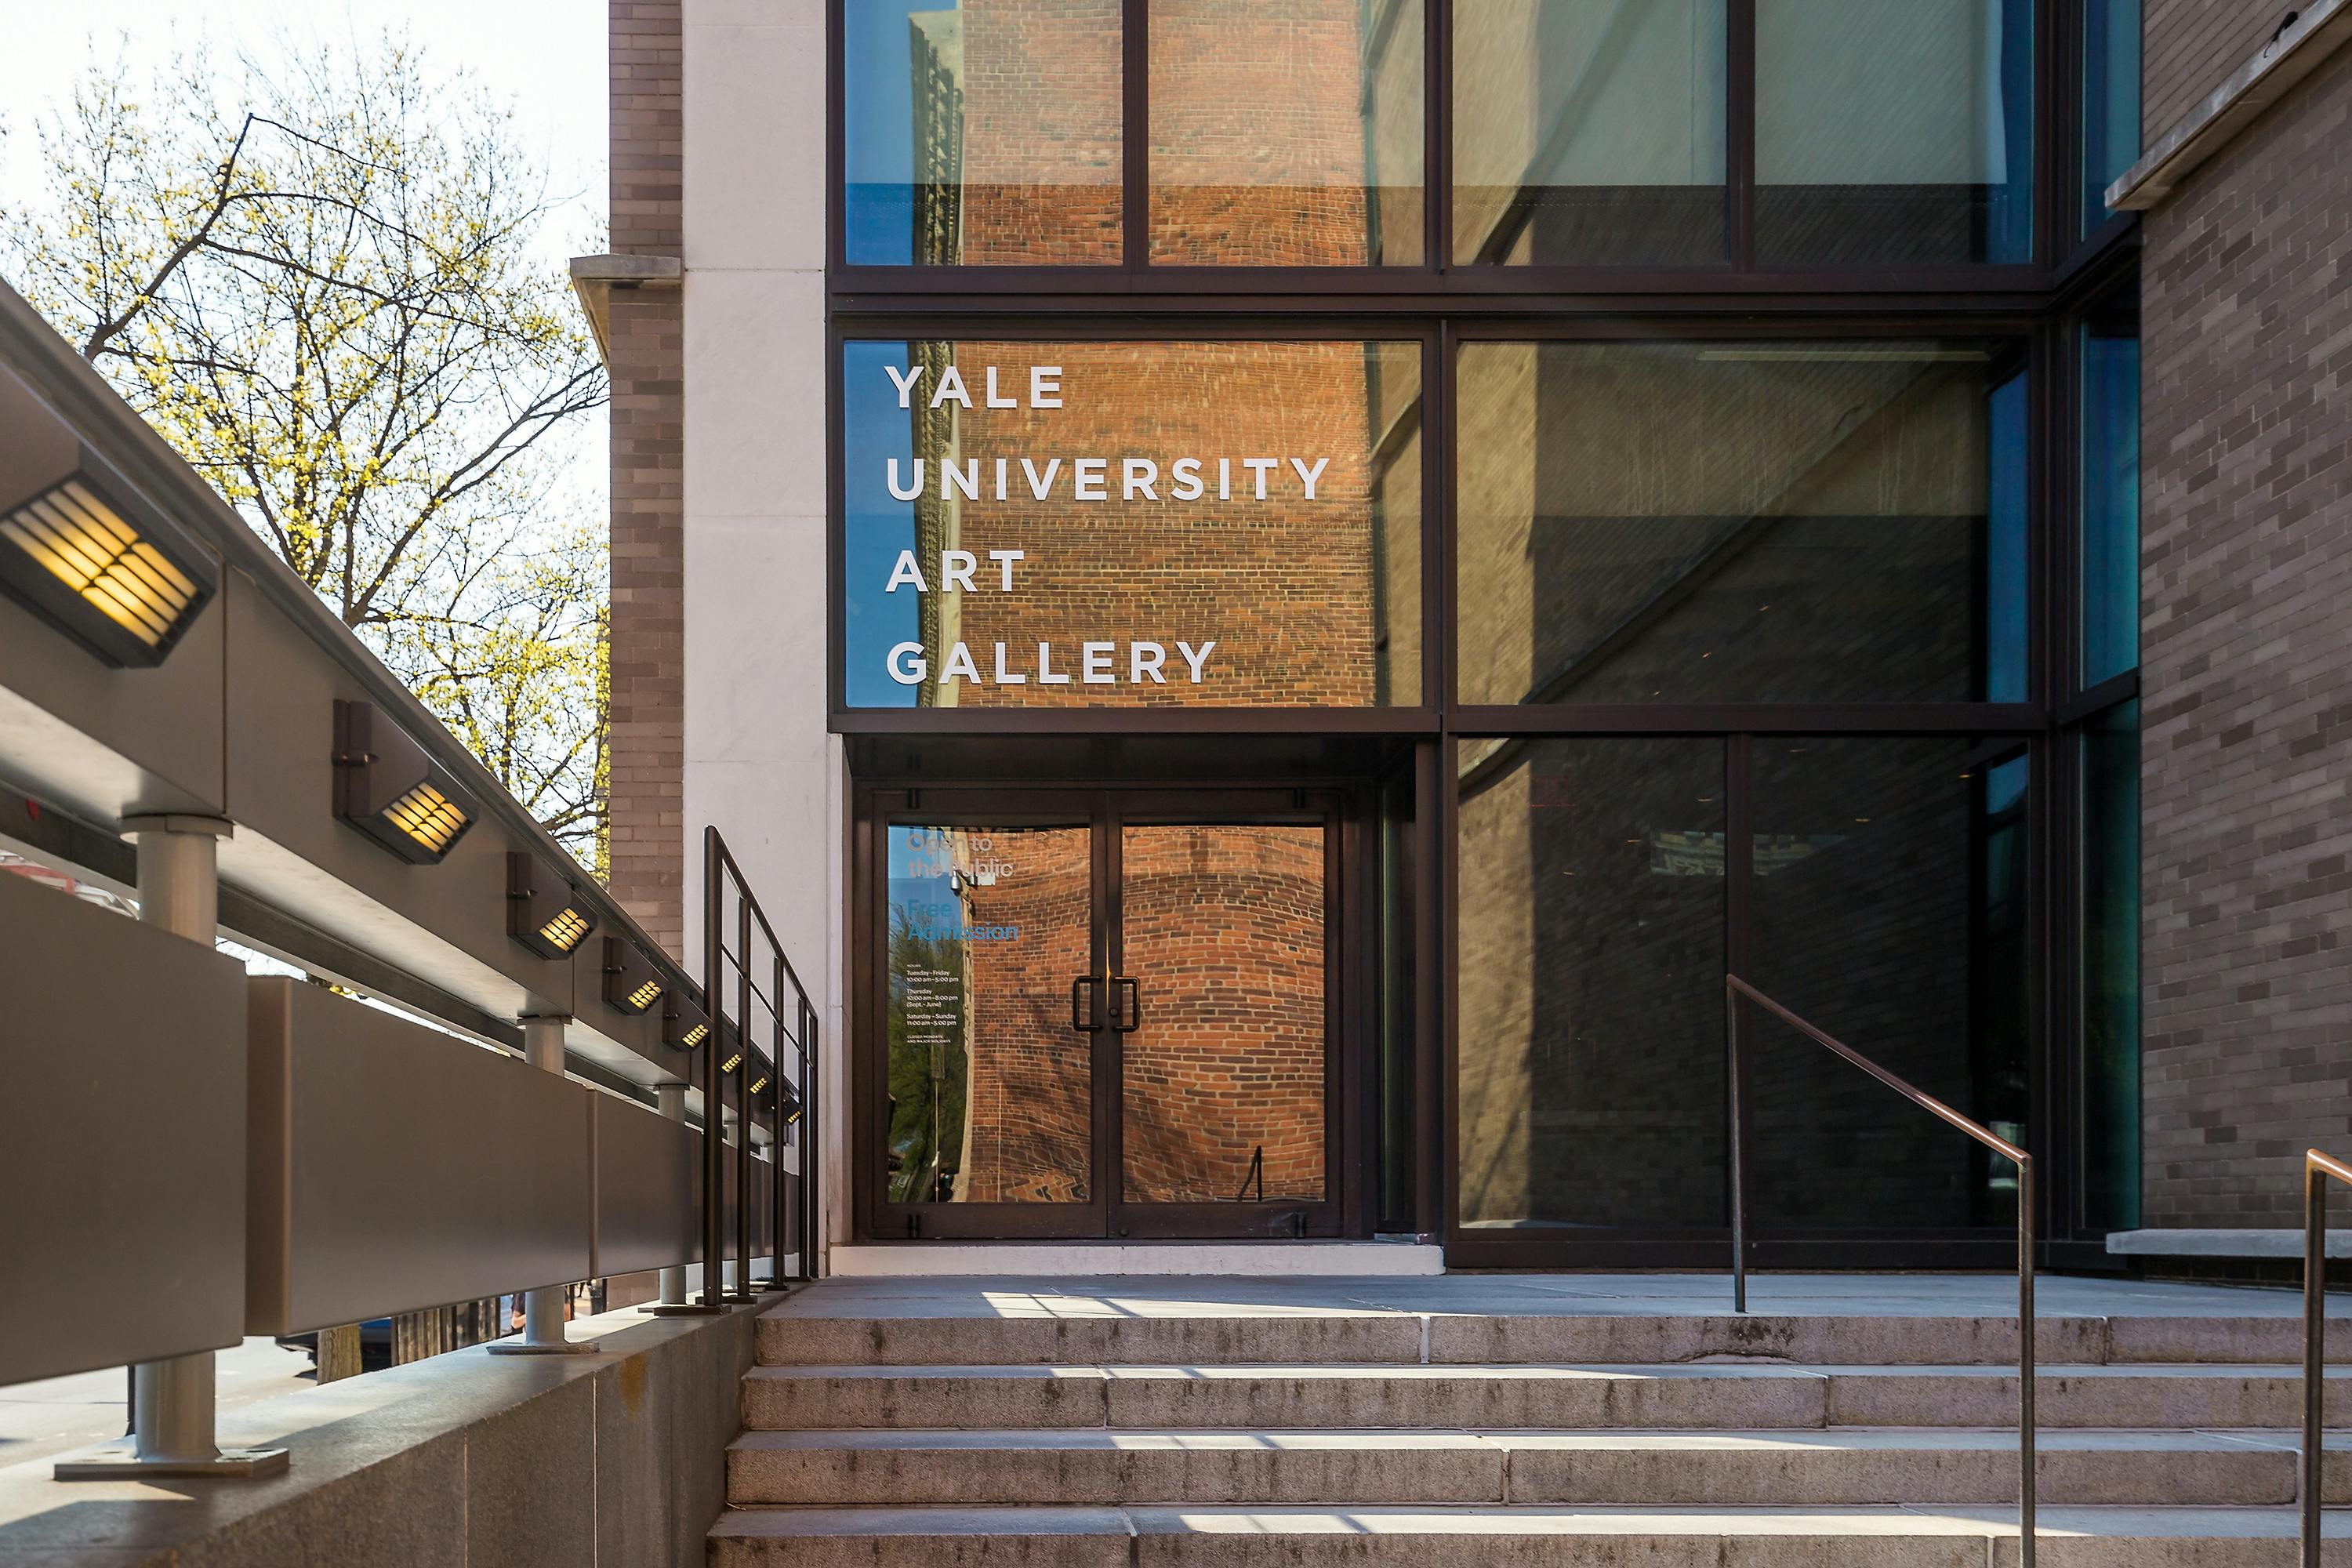 Art Gallery at Yale University*